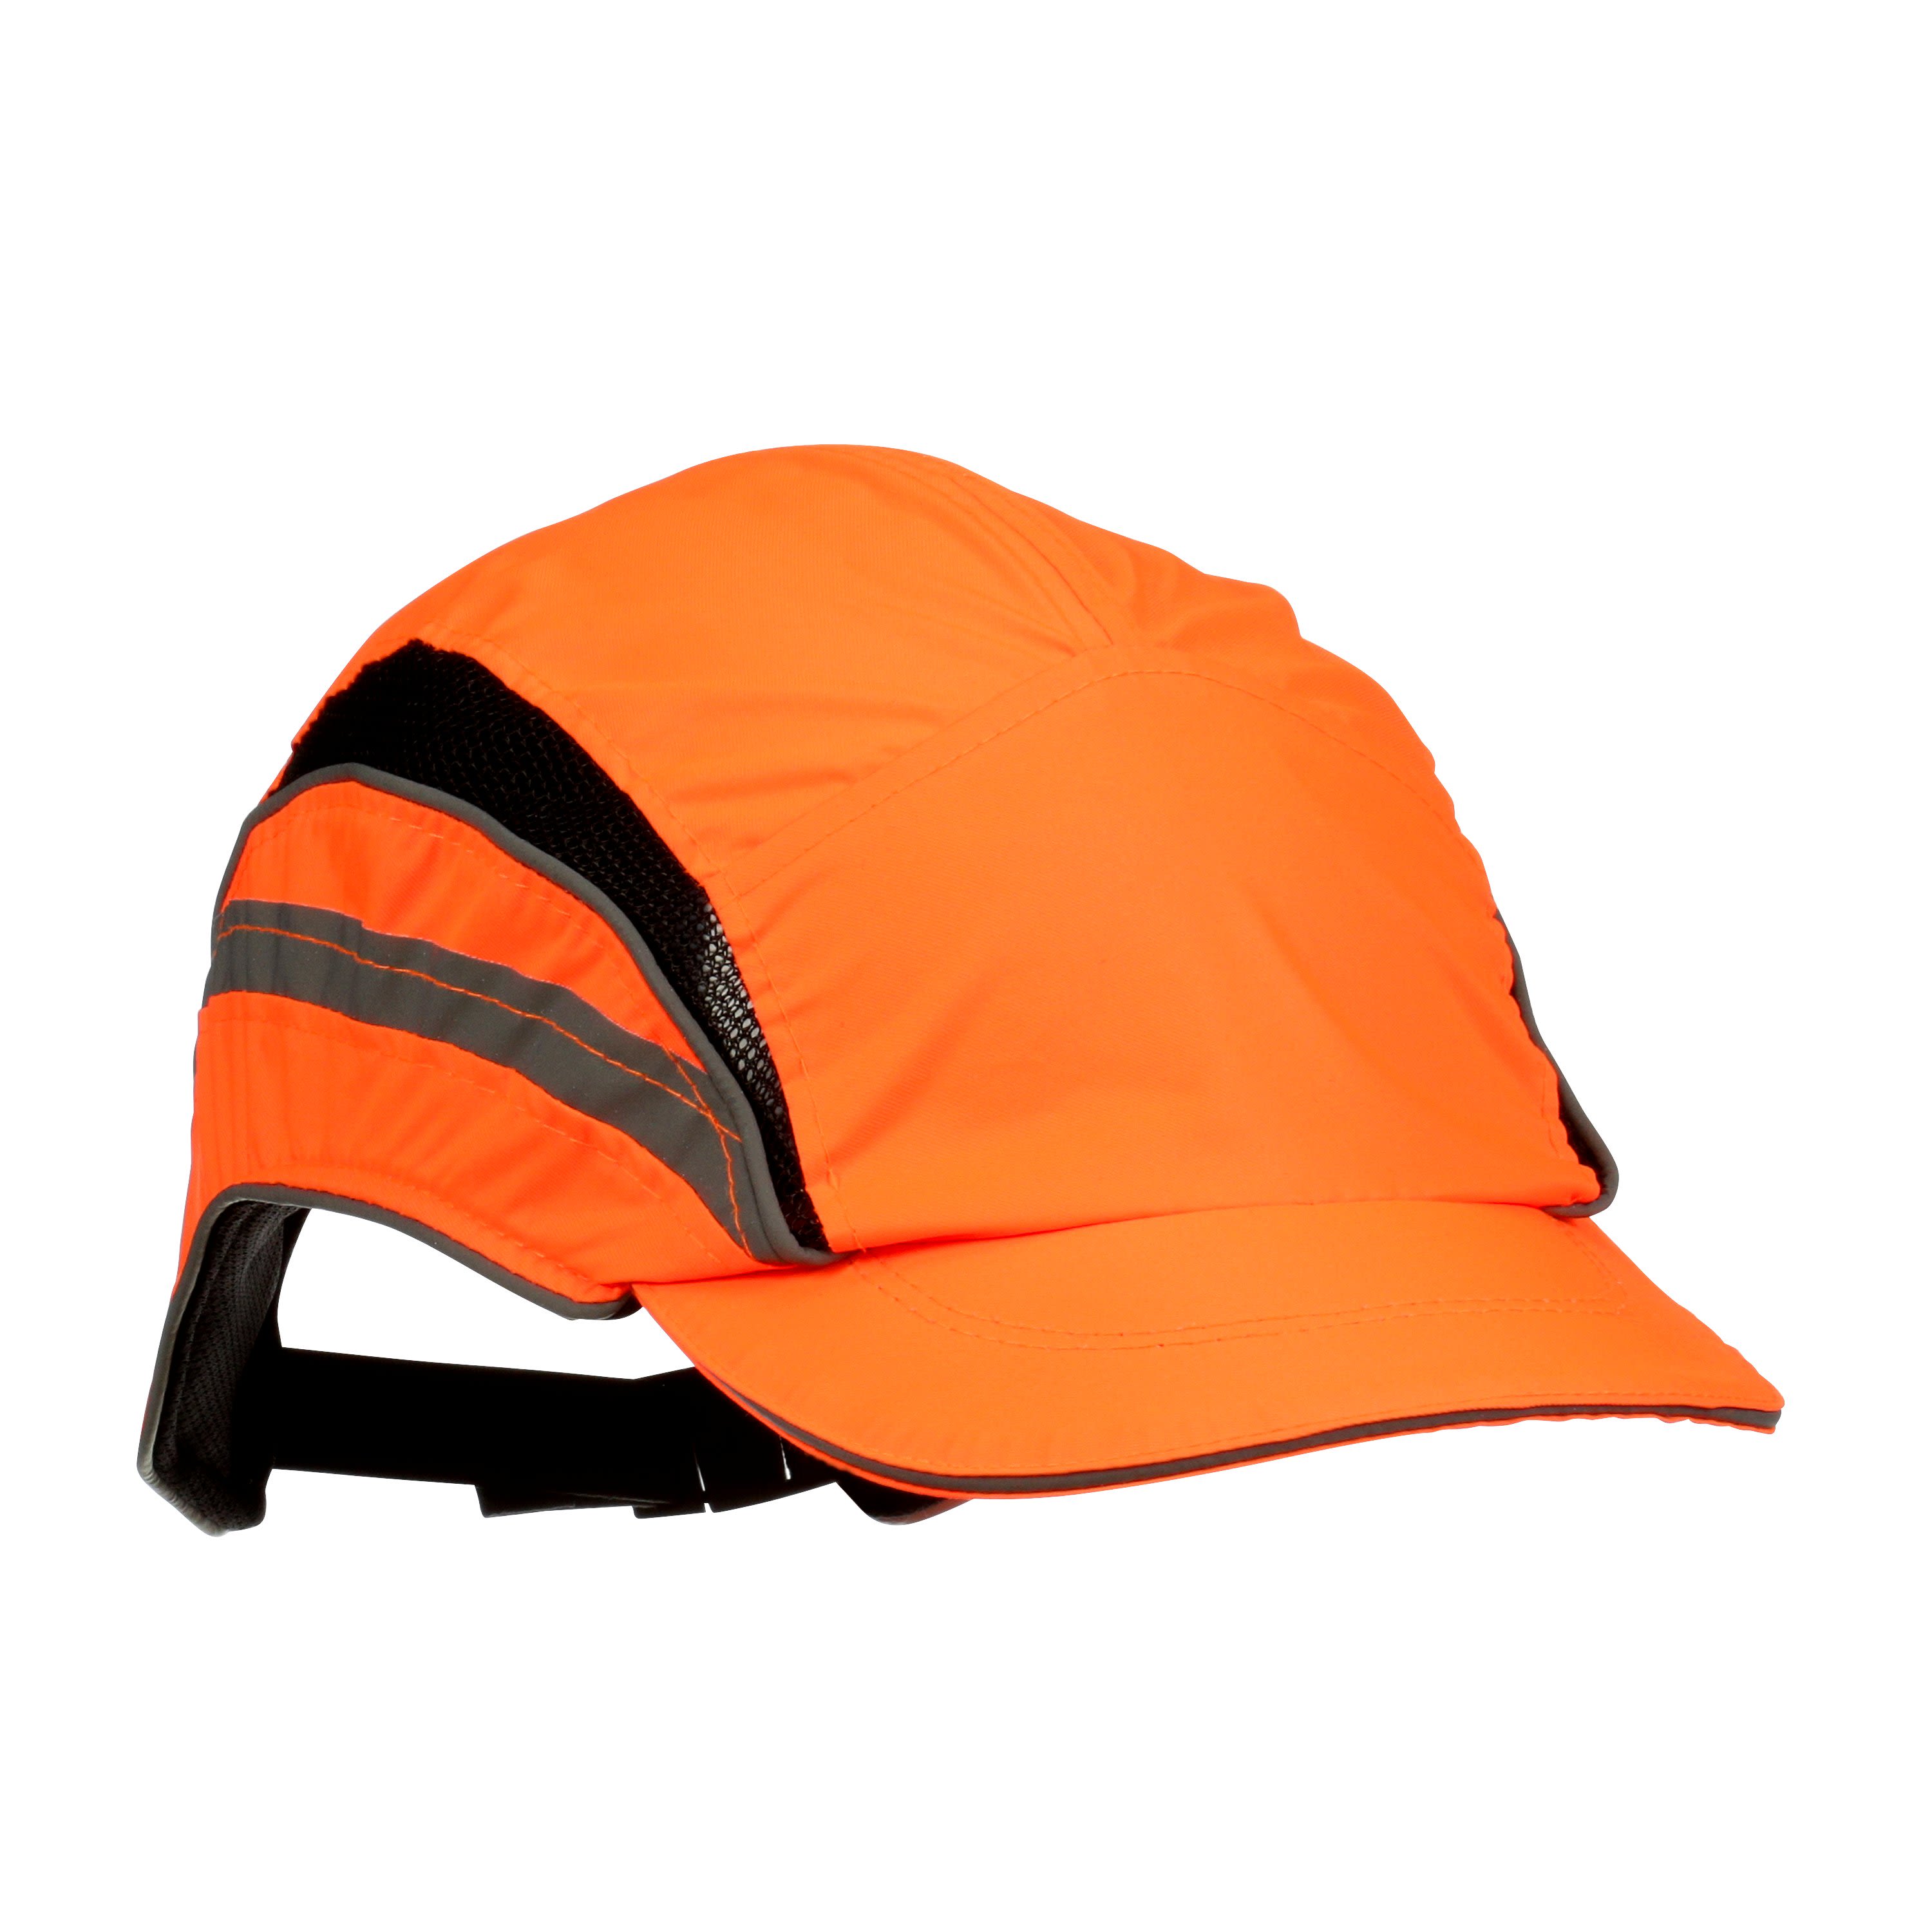 3M Orange Short Peaked Bump Cap, ABS Protective Material